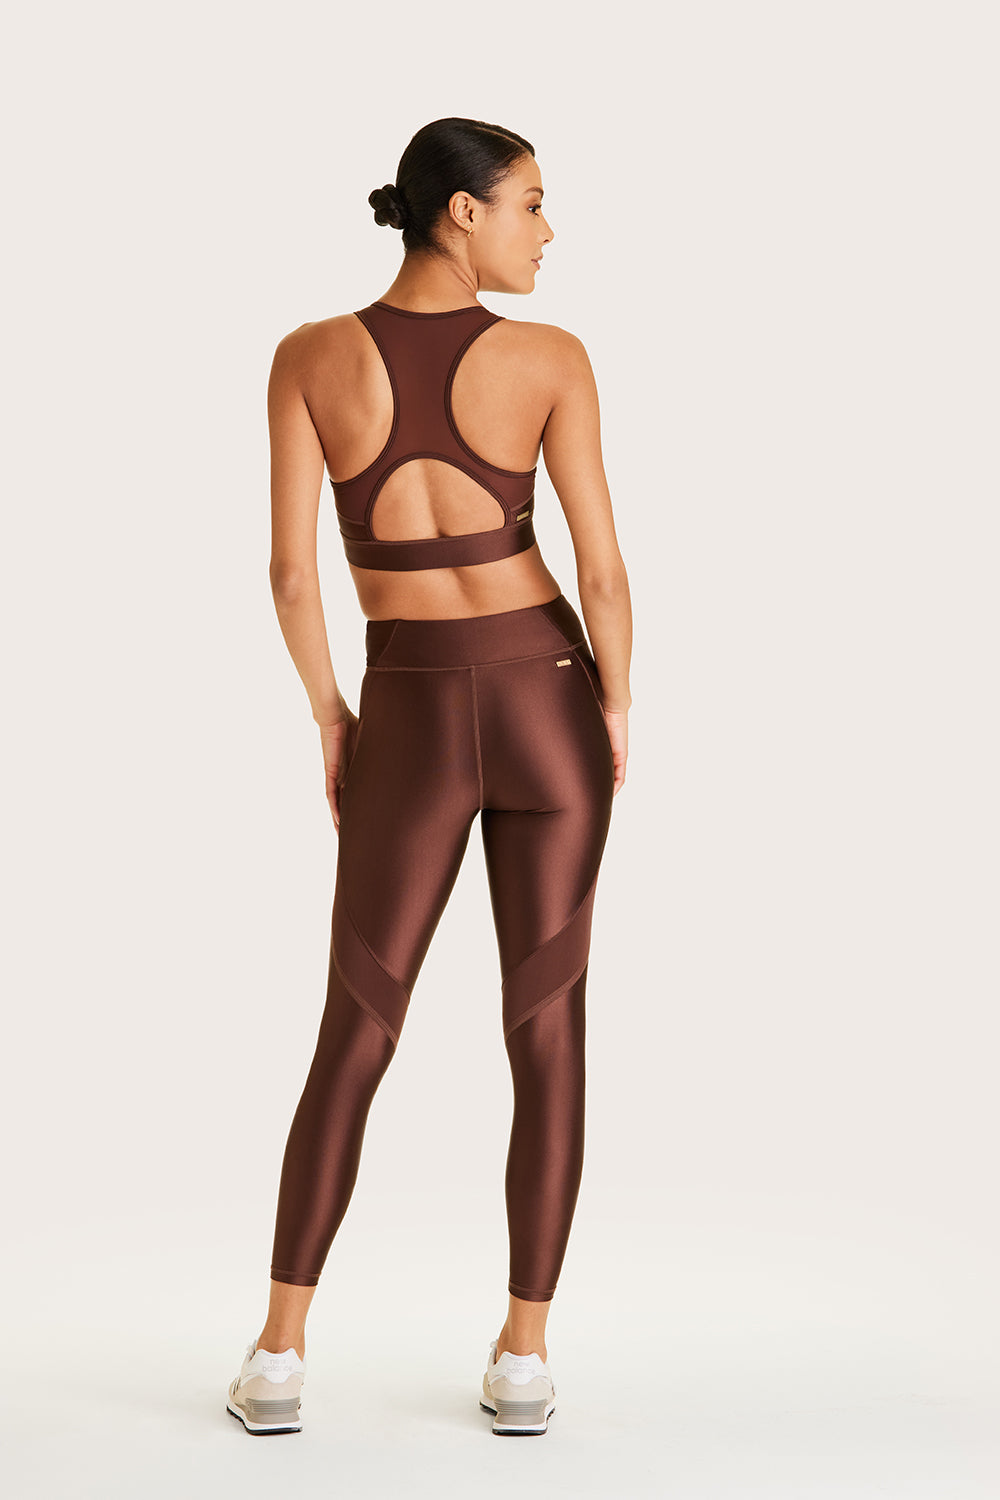 Nude Seamless Sport Style Bra - Size Large (UK Size 12-14, USA 8